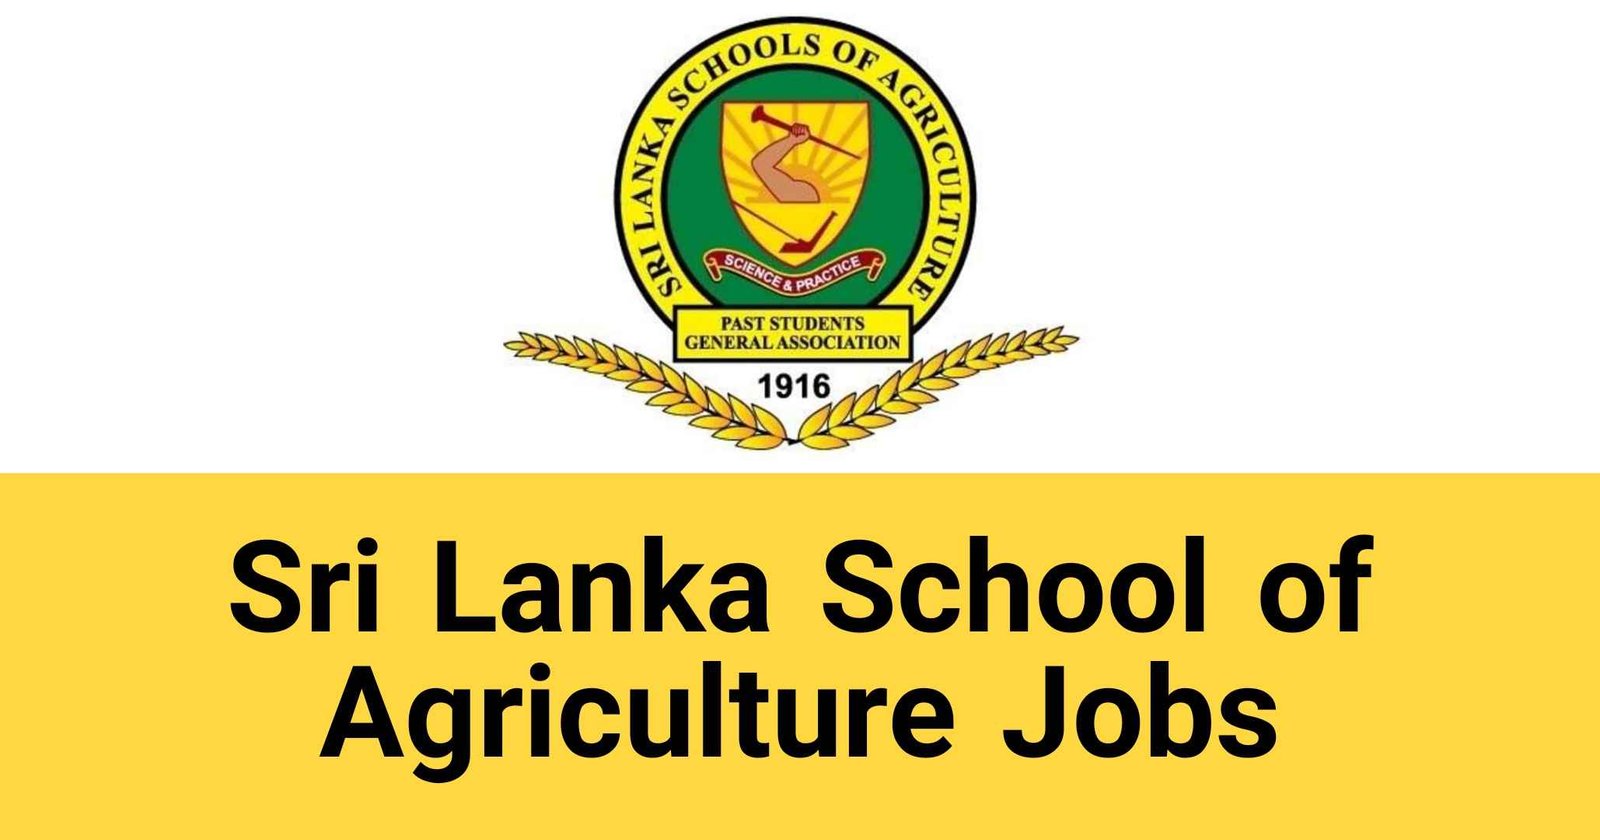 Sri Lanka School of Agriculture Jobs Vacancies Careers